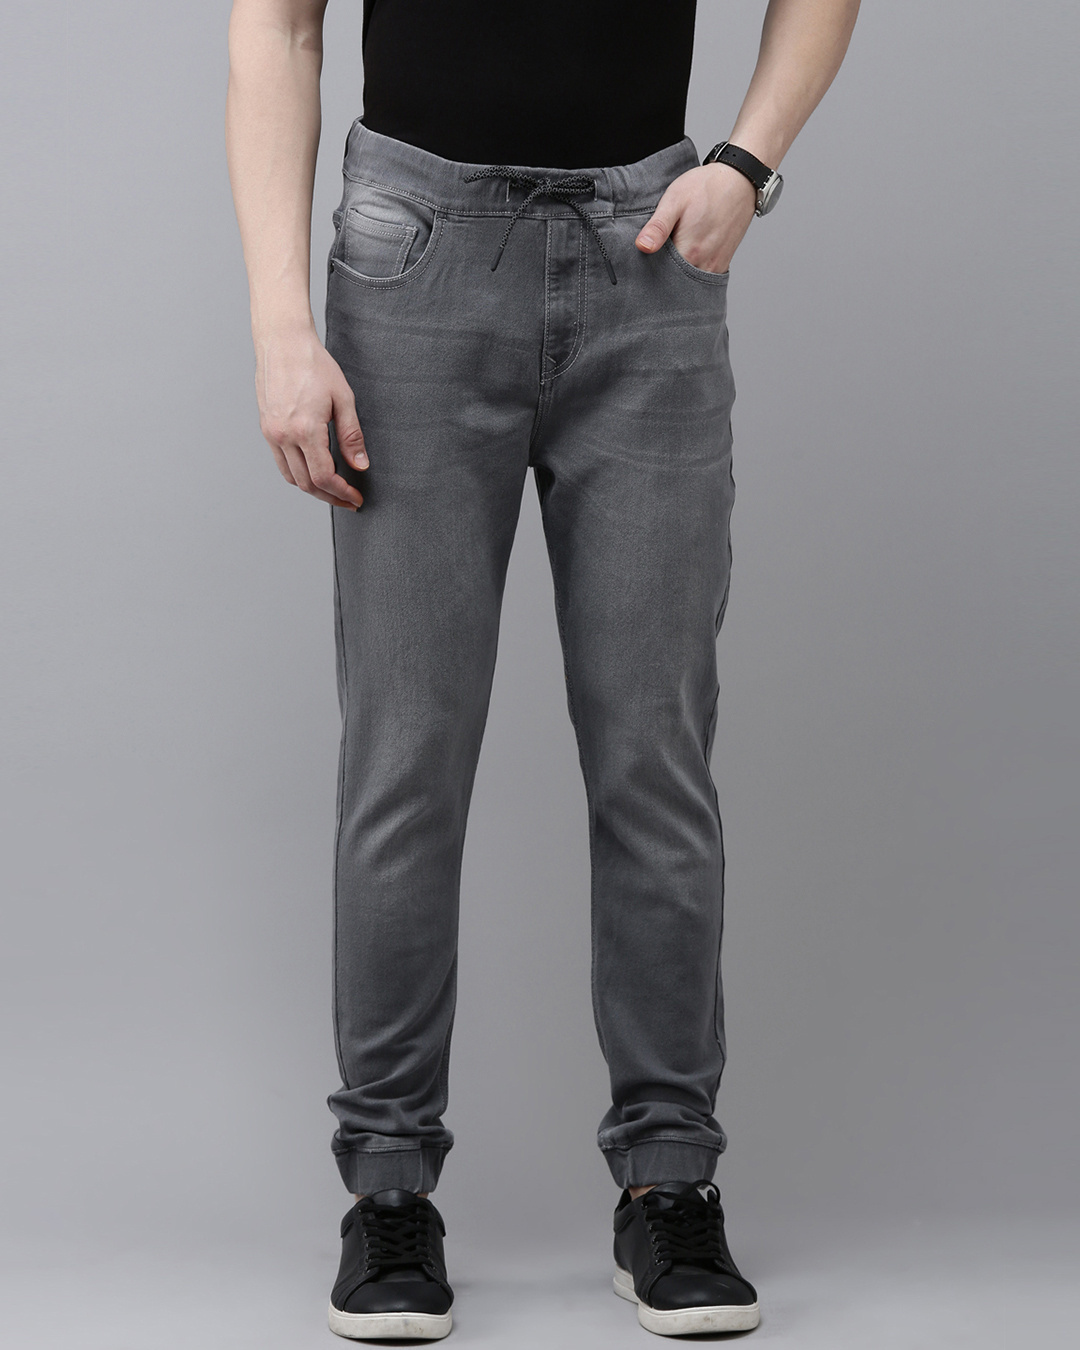 Buy Men's Grey Washed Jogger Jeans Online at Bewakoof